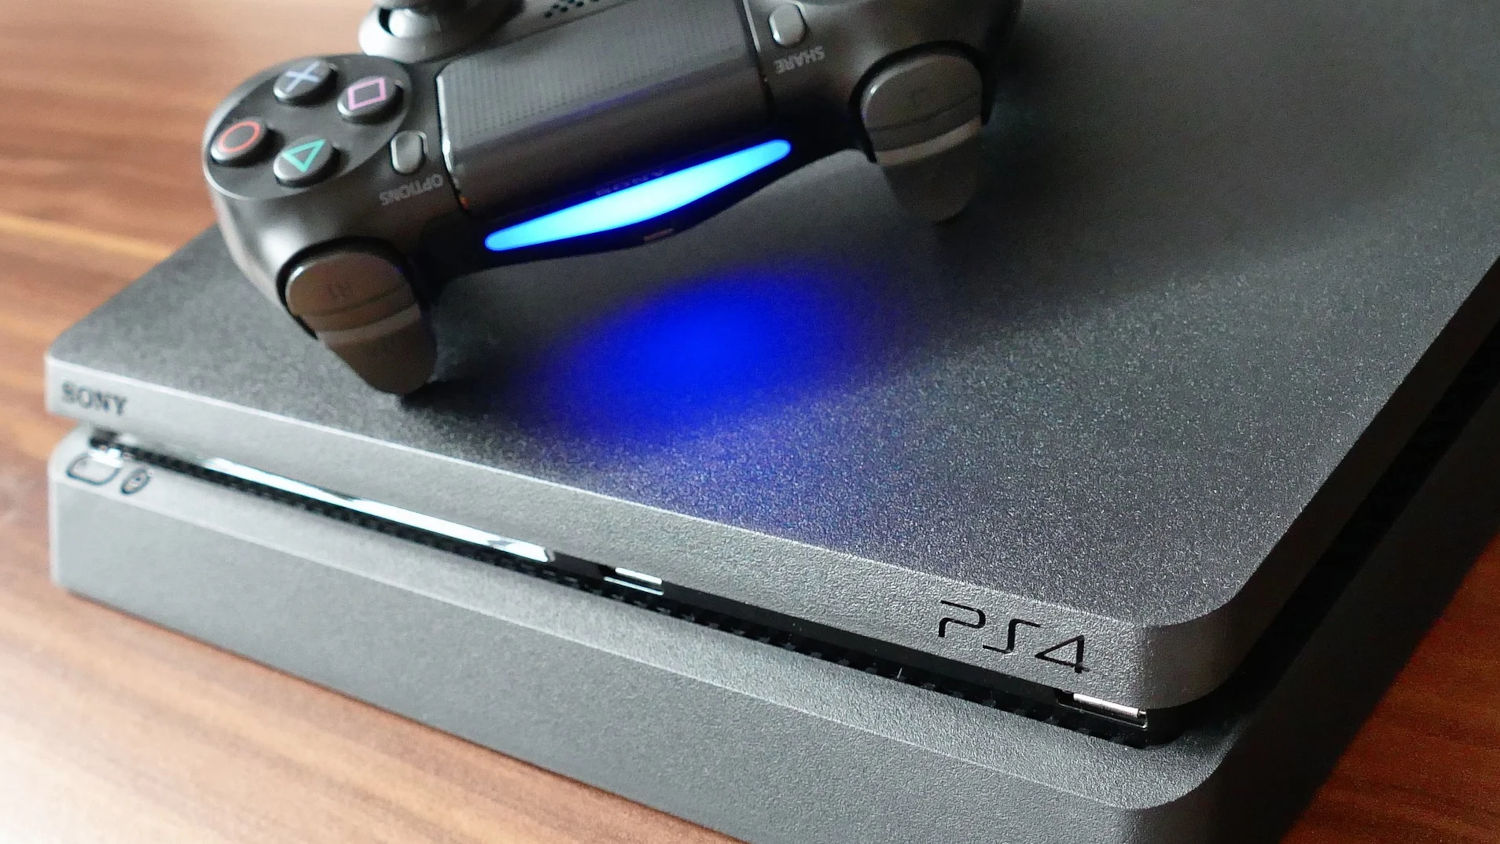 PlayStation pode permitir ajuda de outros jogadores para passar fase